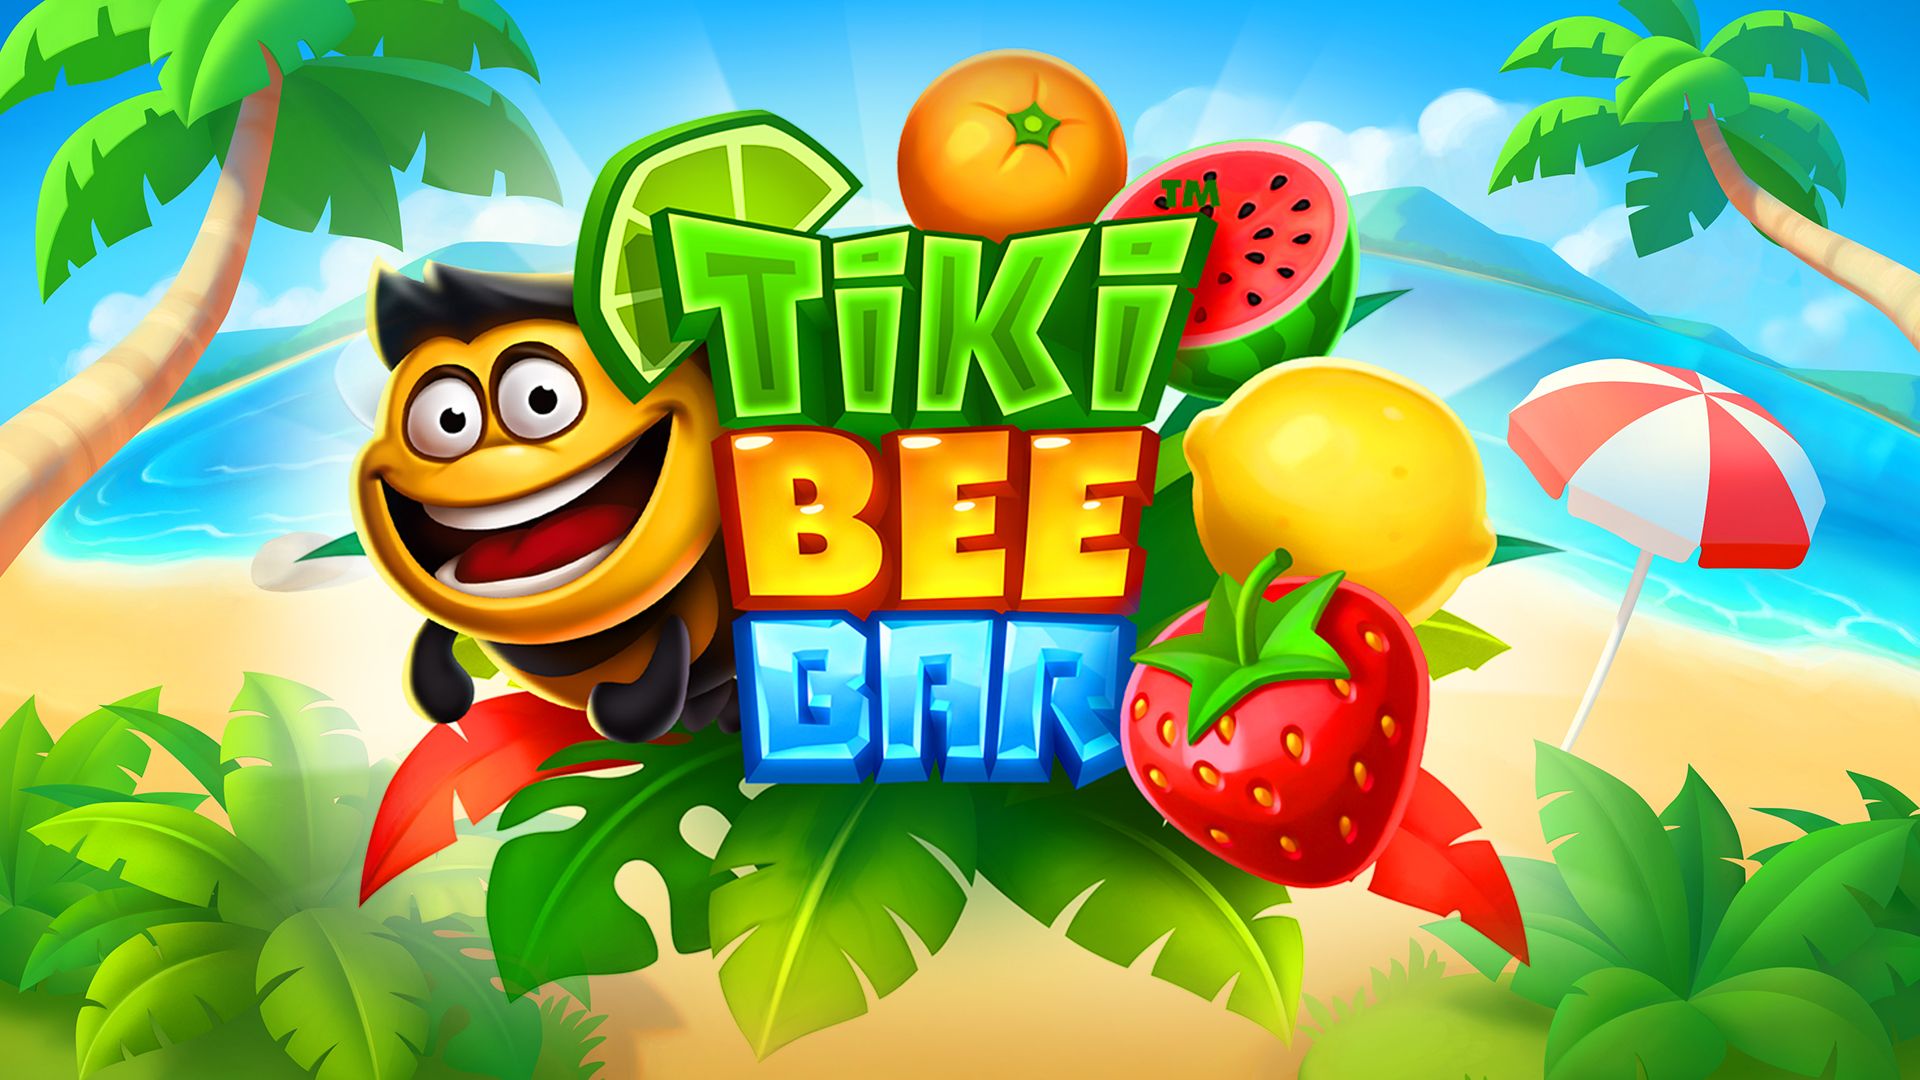 Tiki Bee Bar is live now